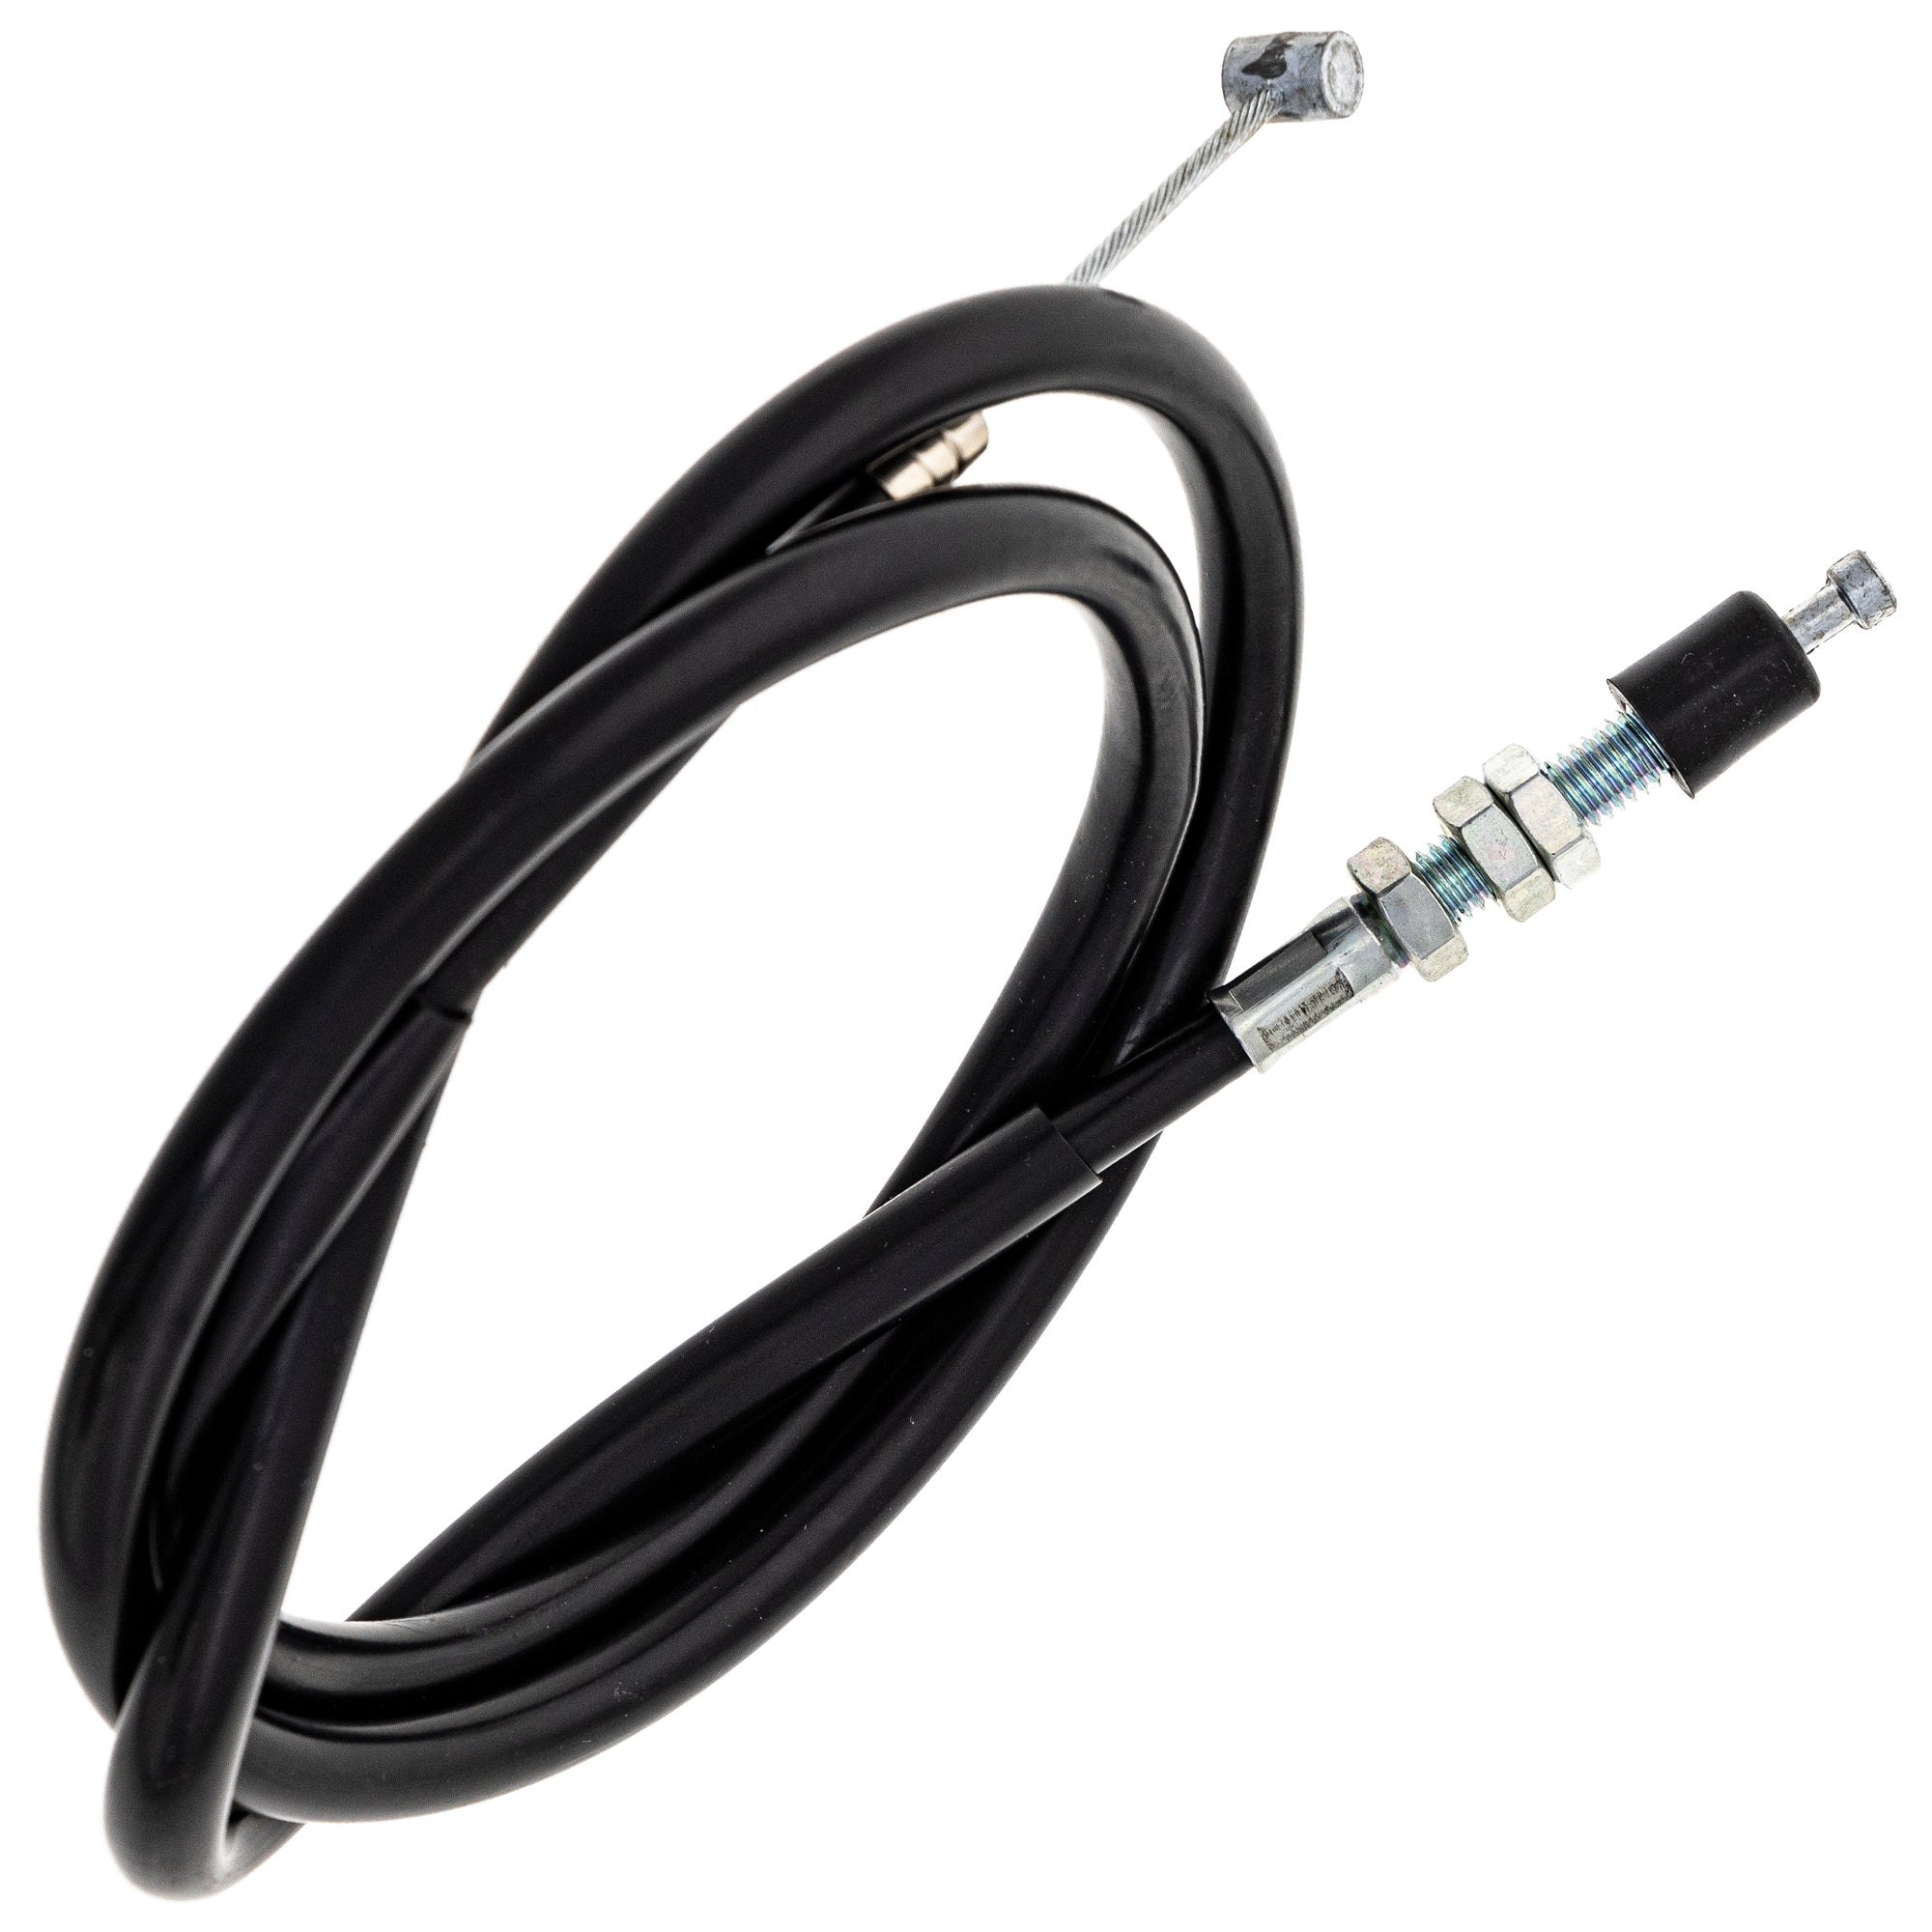 Clutch Cable For Yamaha 4U8-26335-00-00 49A-26335-01-00